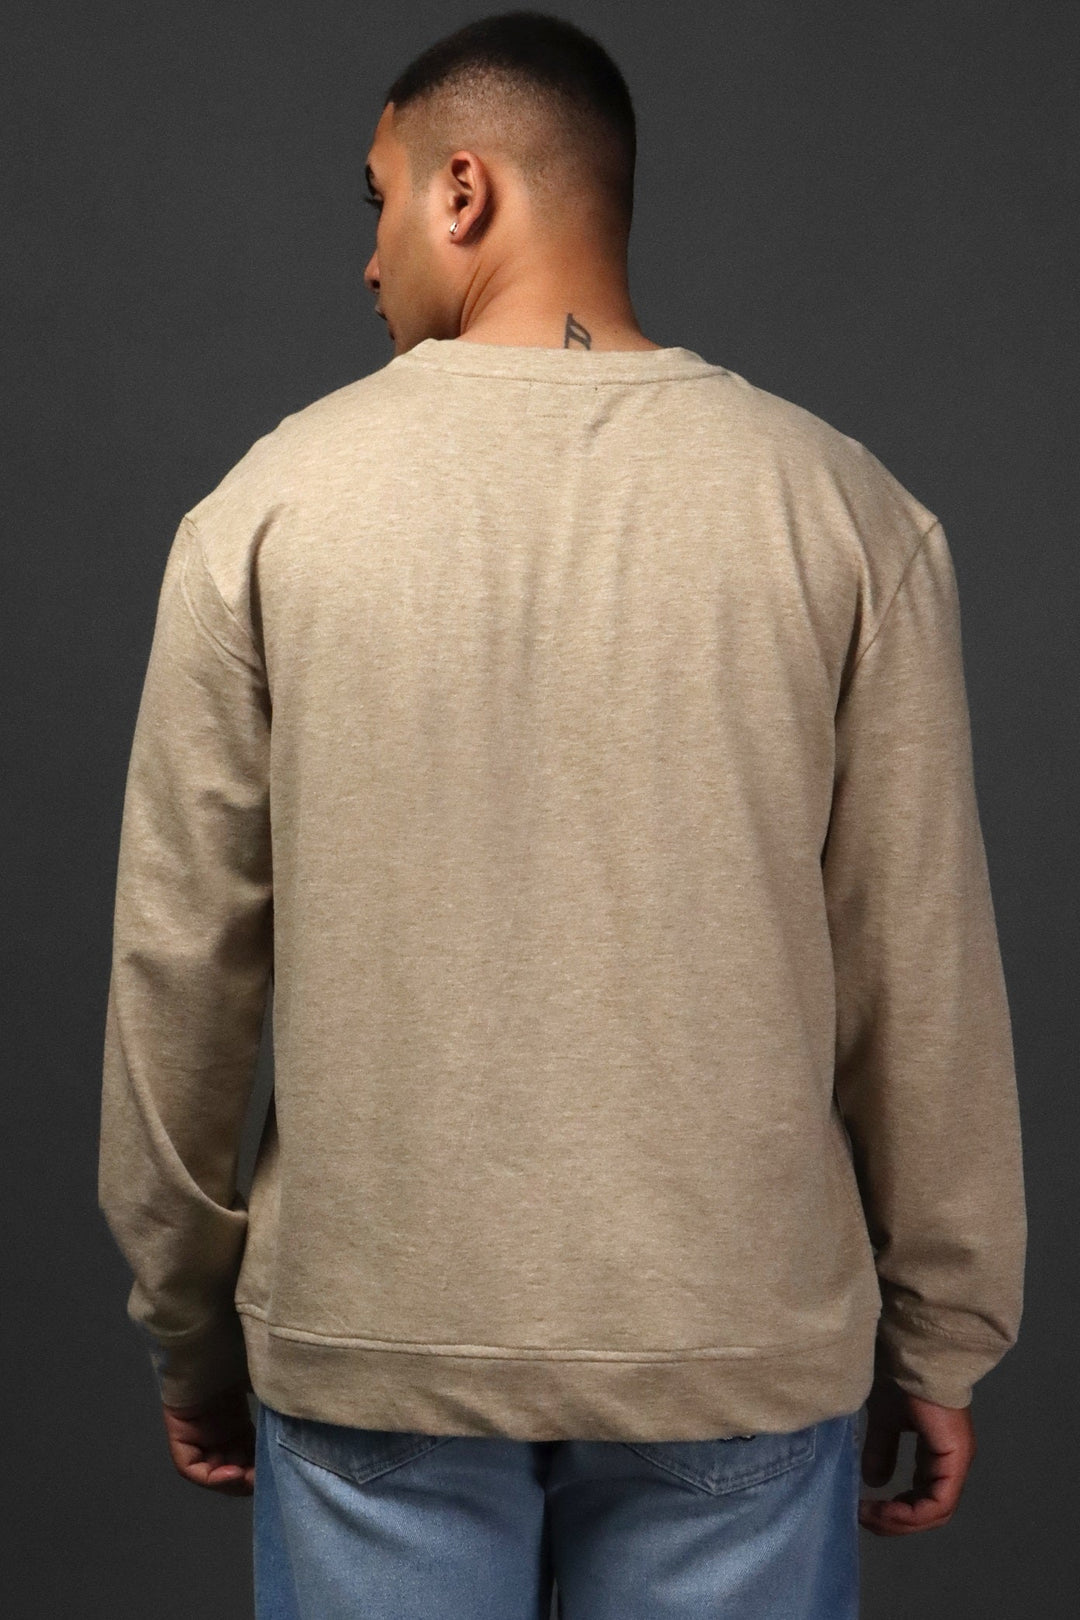 Basic Sweatshirt - Men's Basic Sweatshirt#5